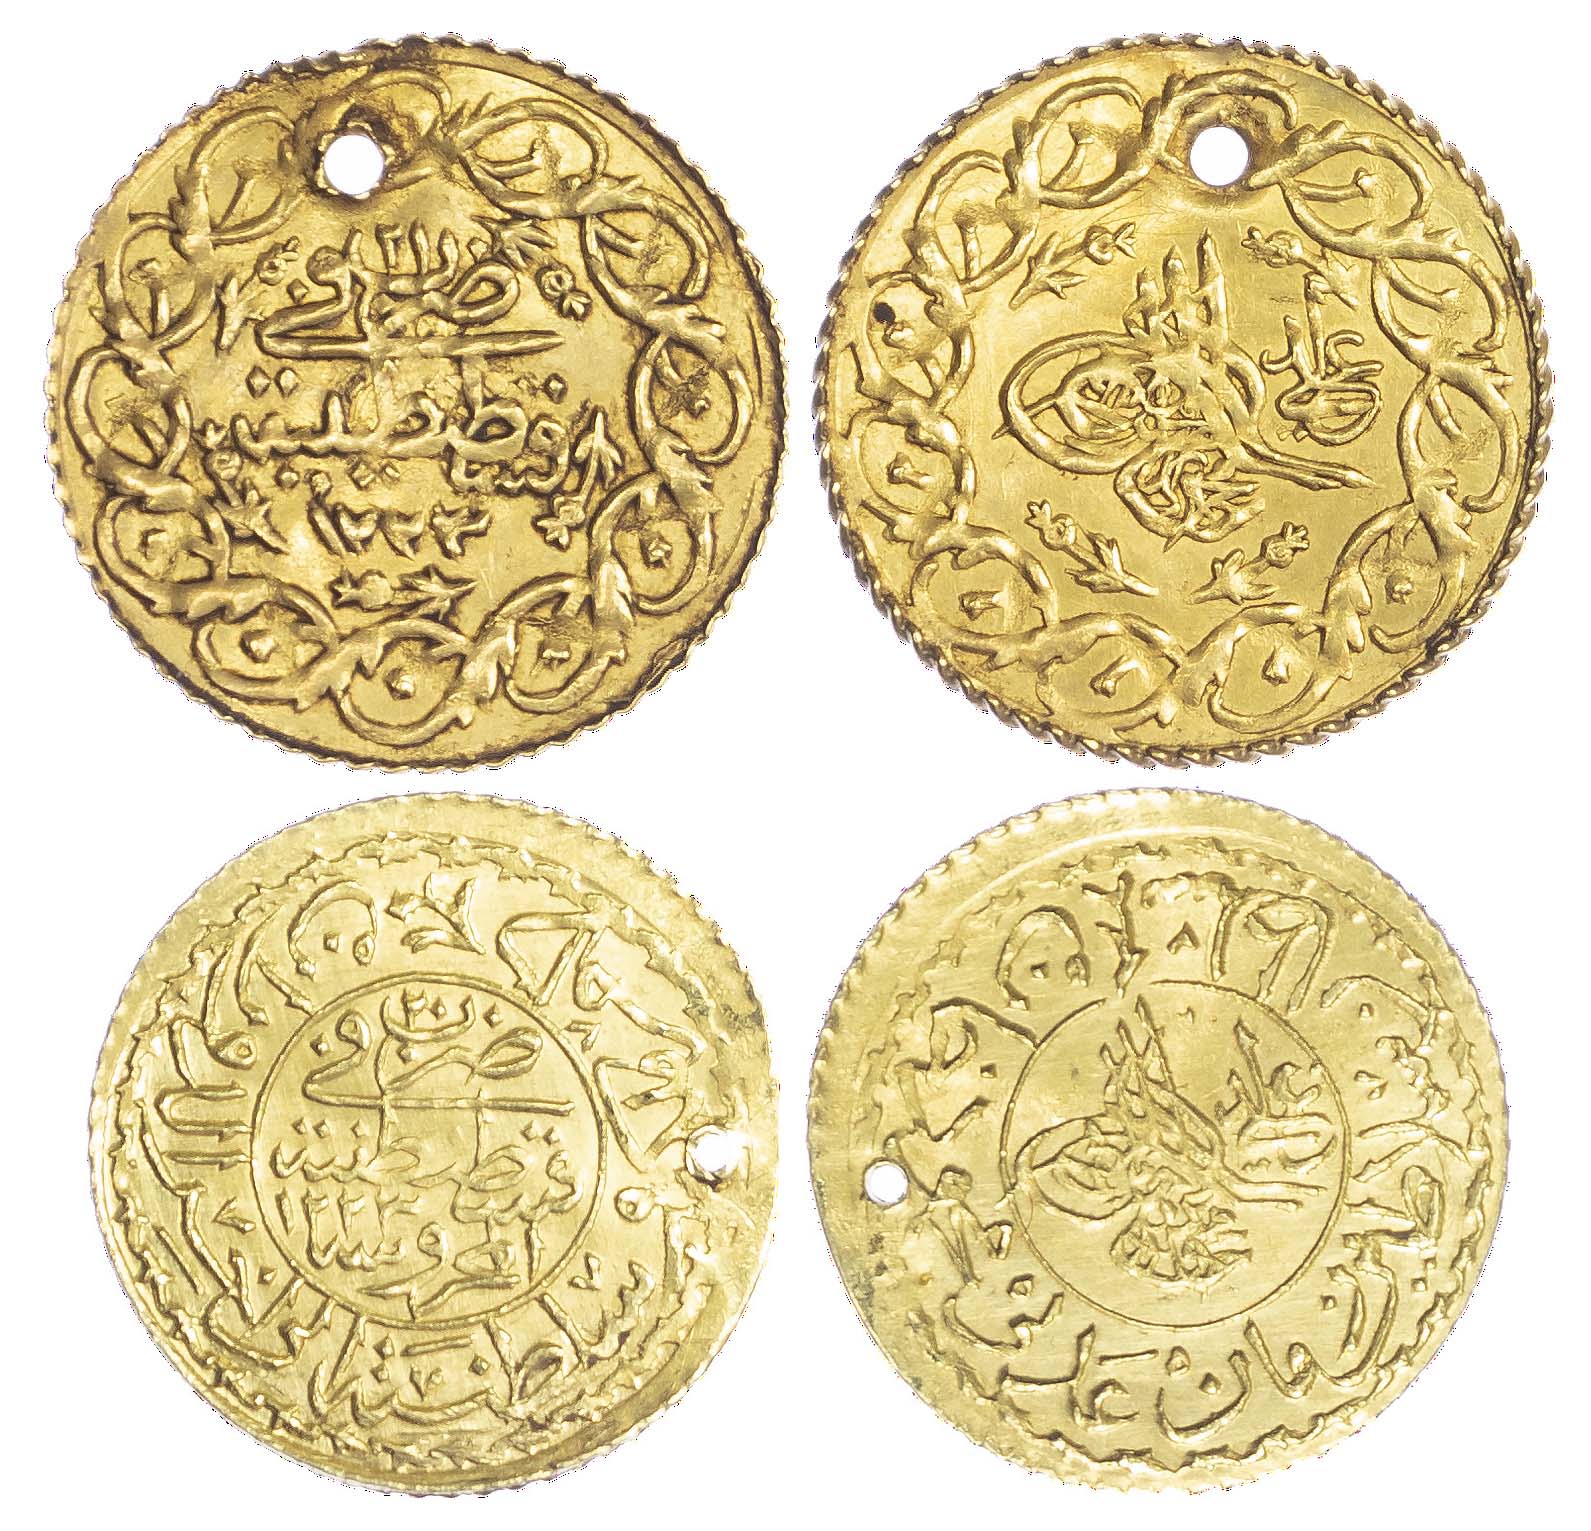 Ottoman Empire, Mahmud II (1808-1839), gold Mahmudiye and gold Cedid Adli Altın - Qustantiniya